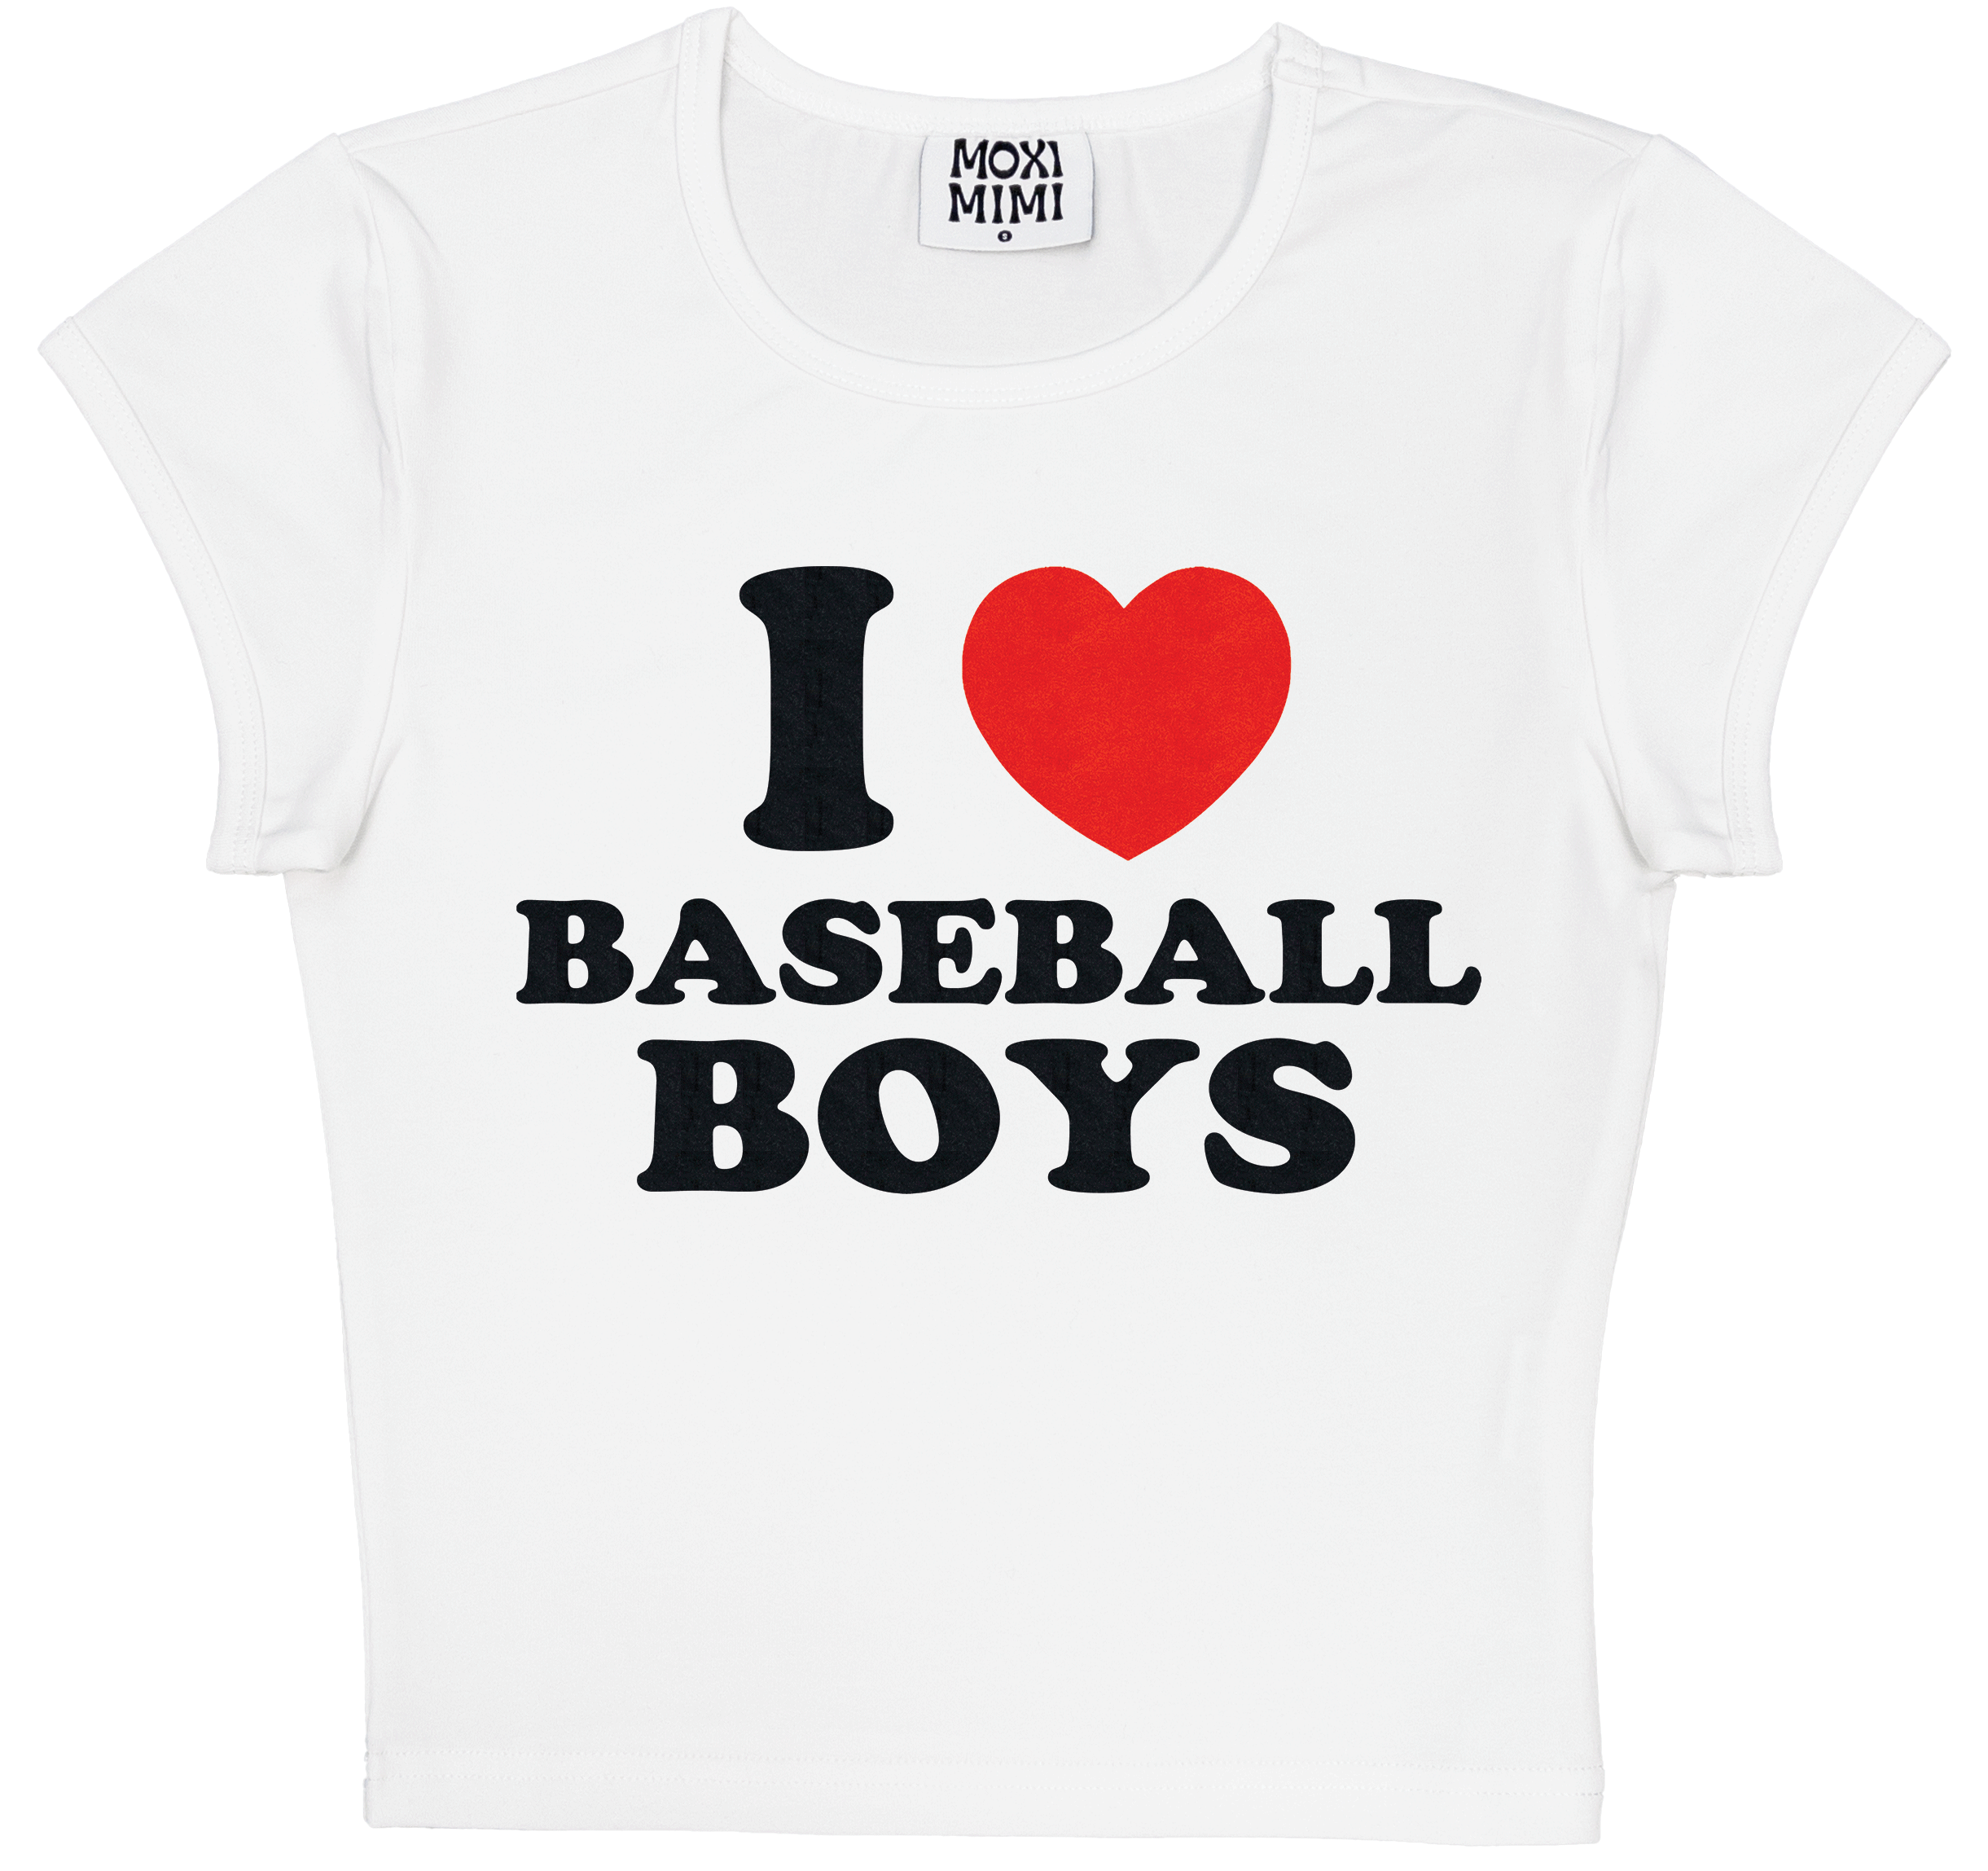 San Francisco Baseball Fans. Is It Just Me? Onesie (NB-18M) & Toddler Tee (2T-4T) 18 Months / Orange